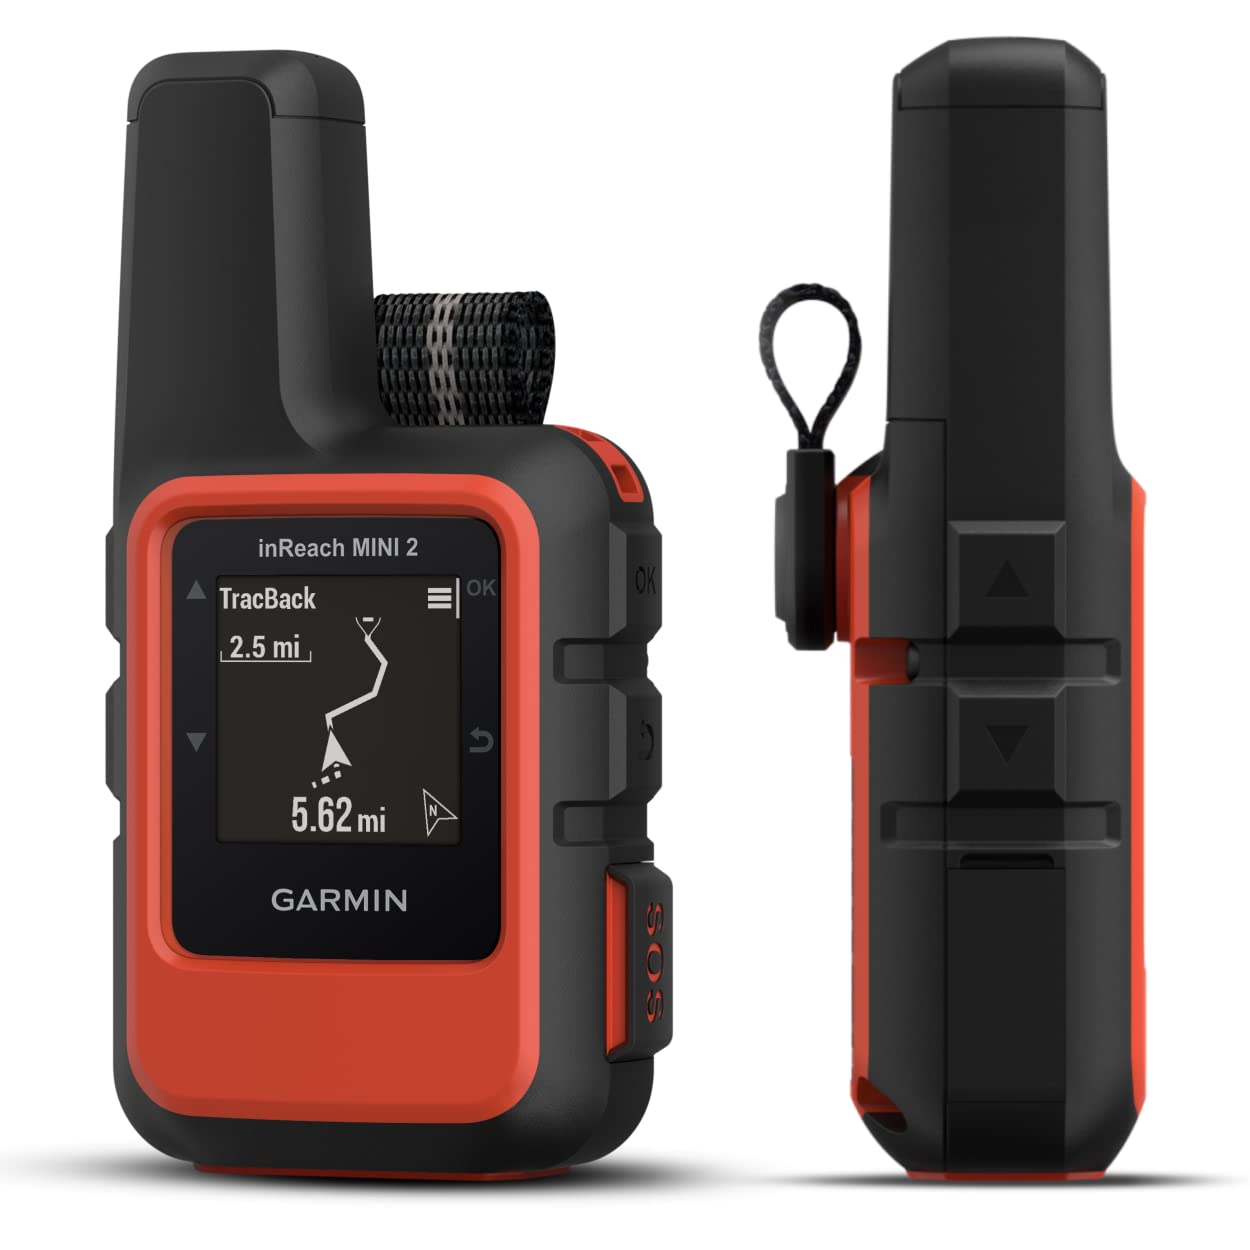 Garmin inReach Mini 2 Lightweight and Compact Satellite Communicator, Hiking Handheld, Flame Red with Wearable4U 2 Pack Cases Black/Khaki Bundle